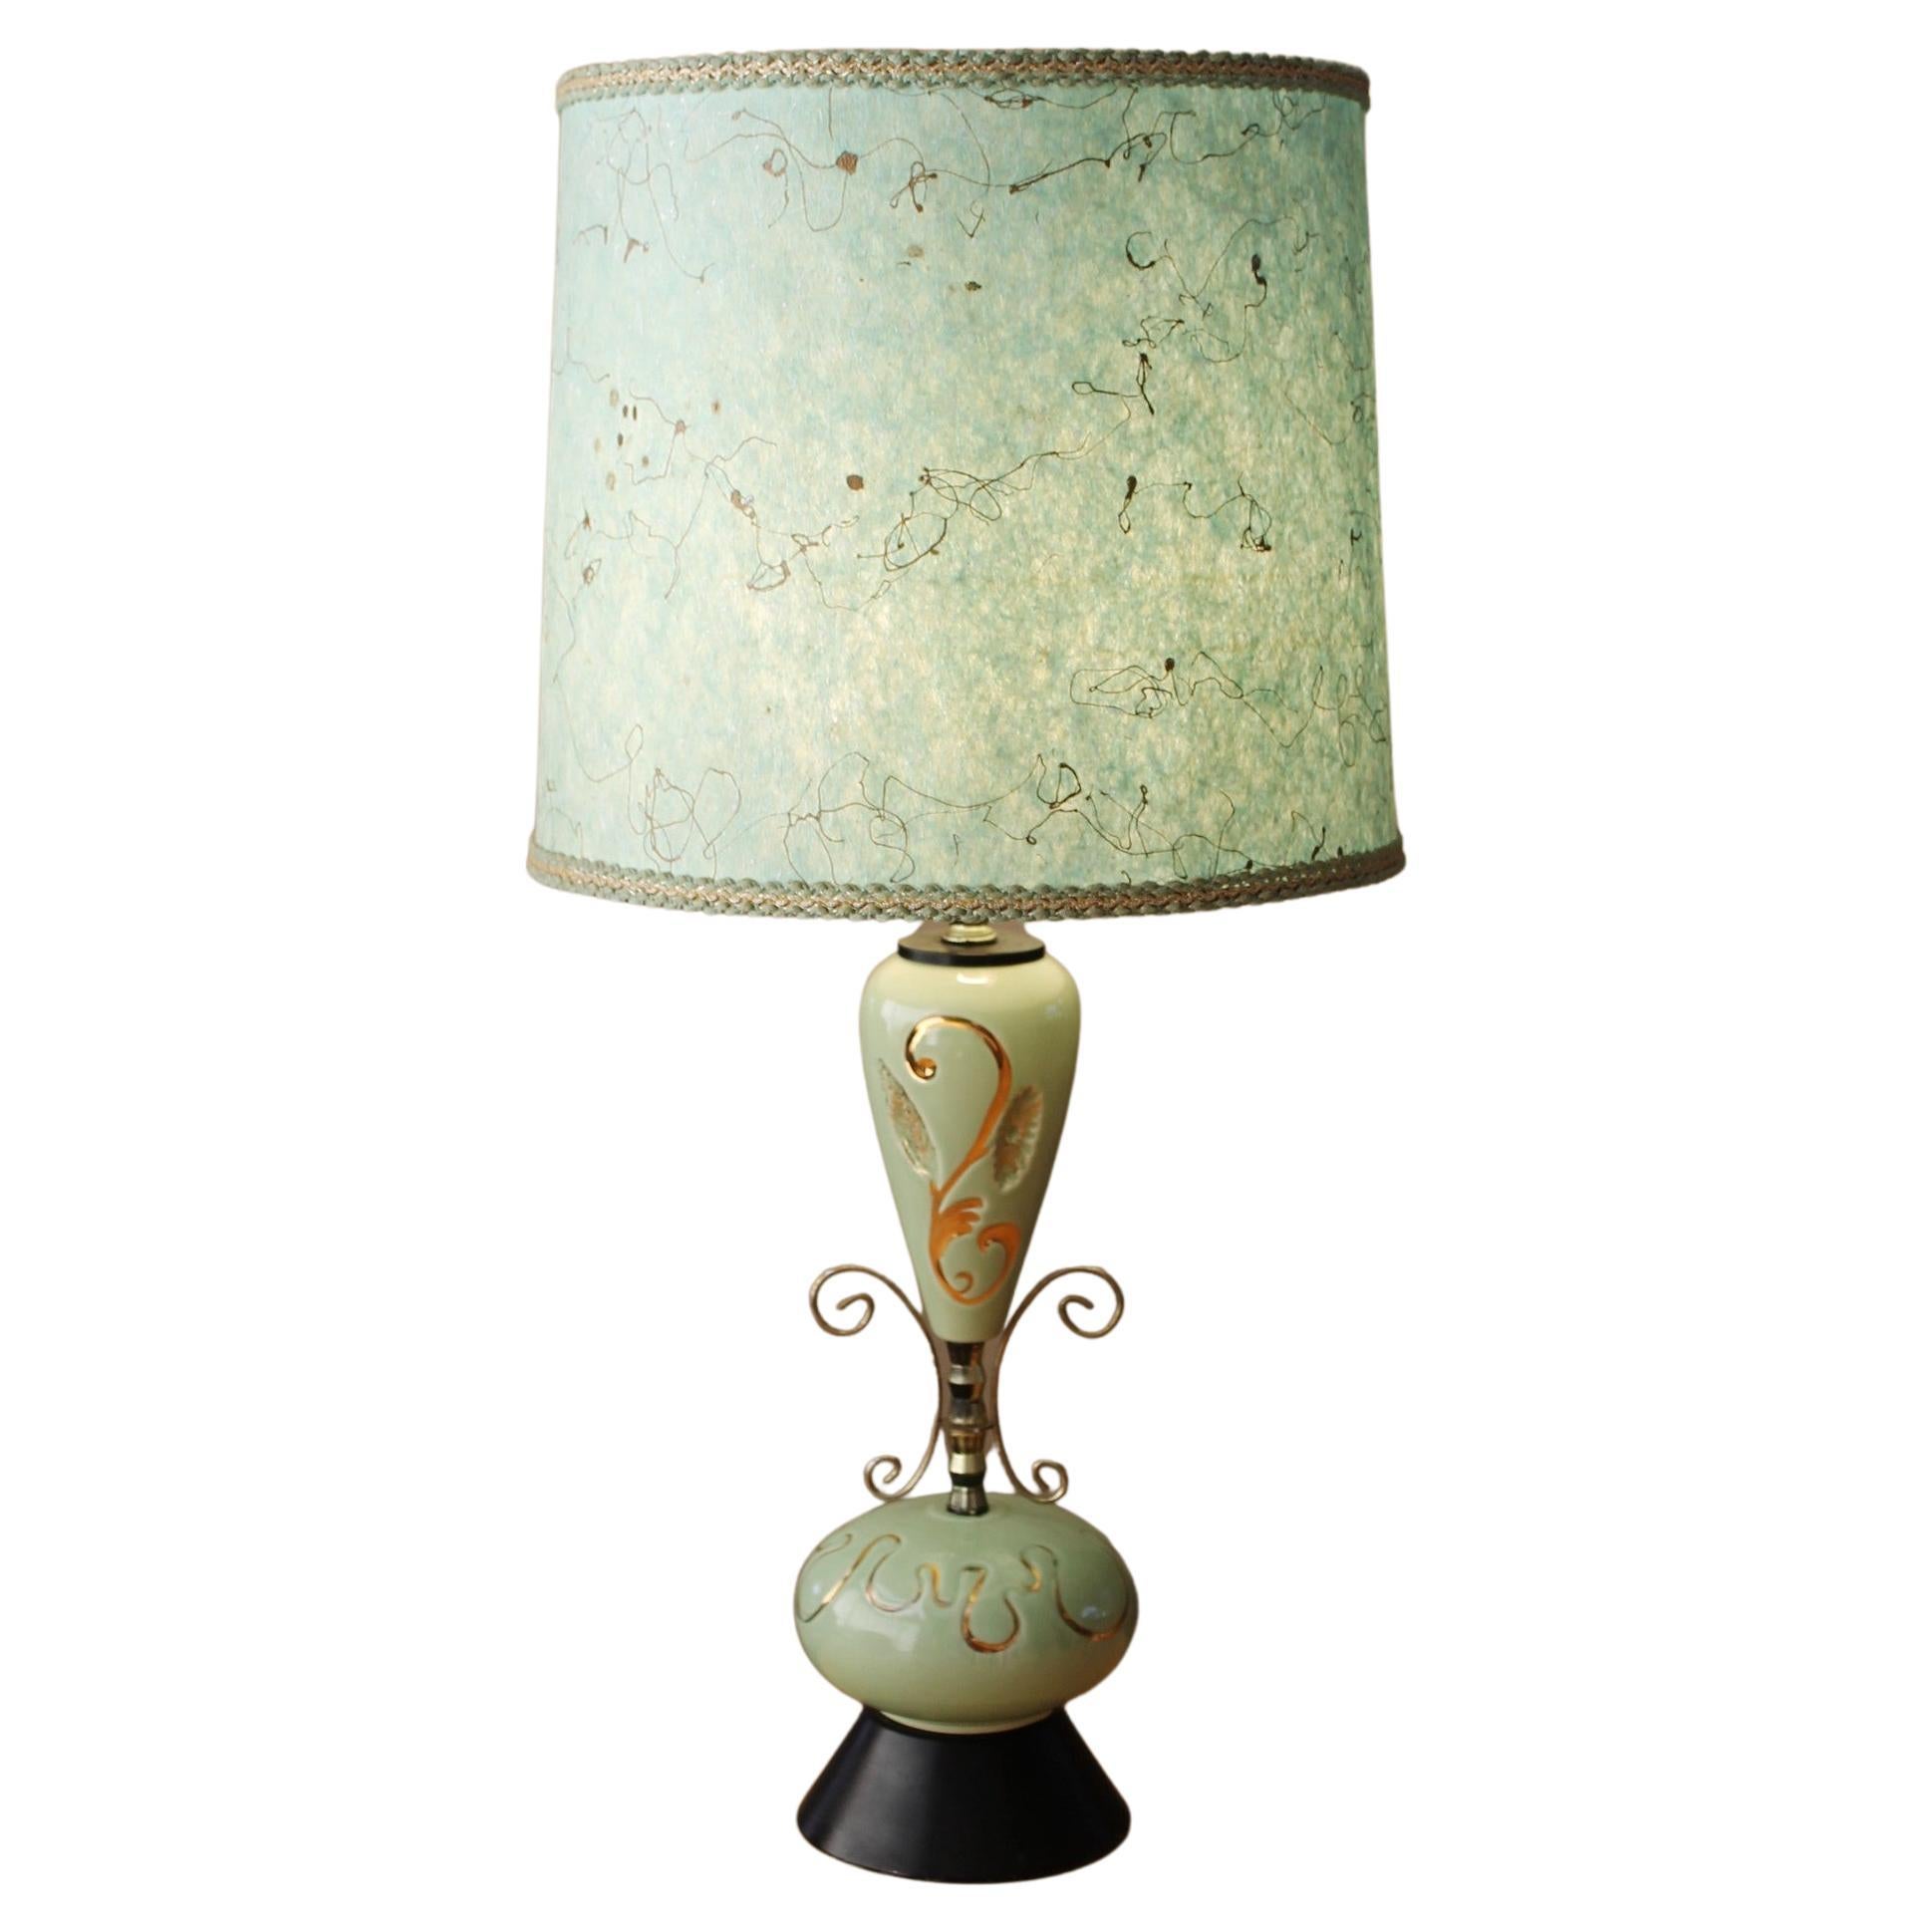 Glorious MId Century Modern Atomic Table Lamp. Mint Green Fiberglass Shade 1950s